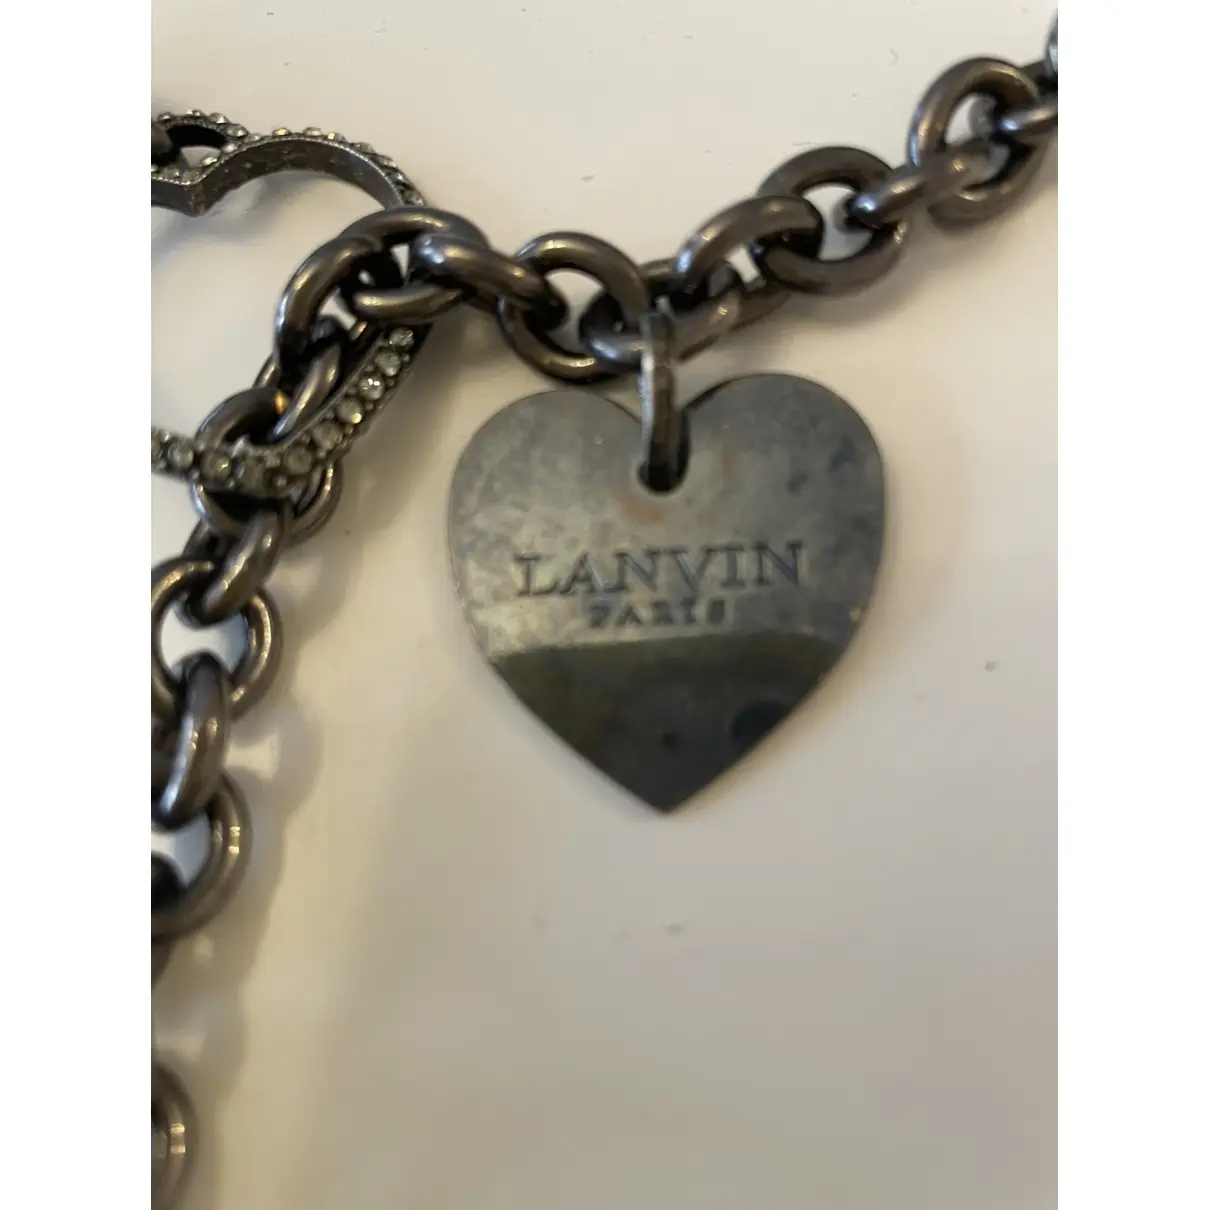 Buy Lanvin Crystal pin & brooche online